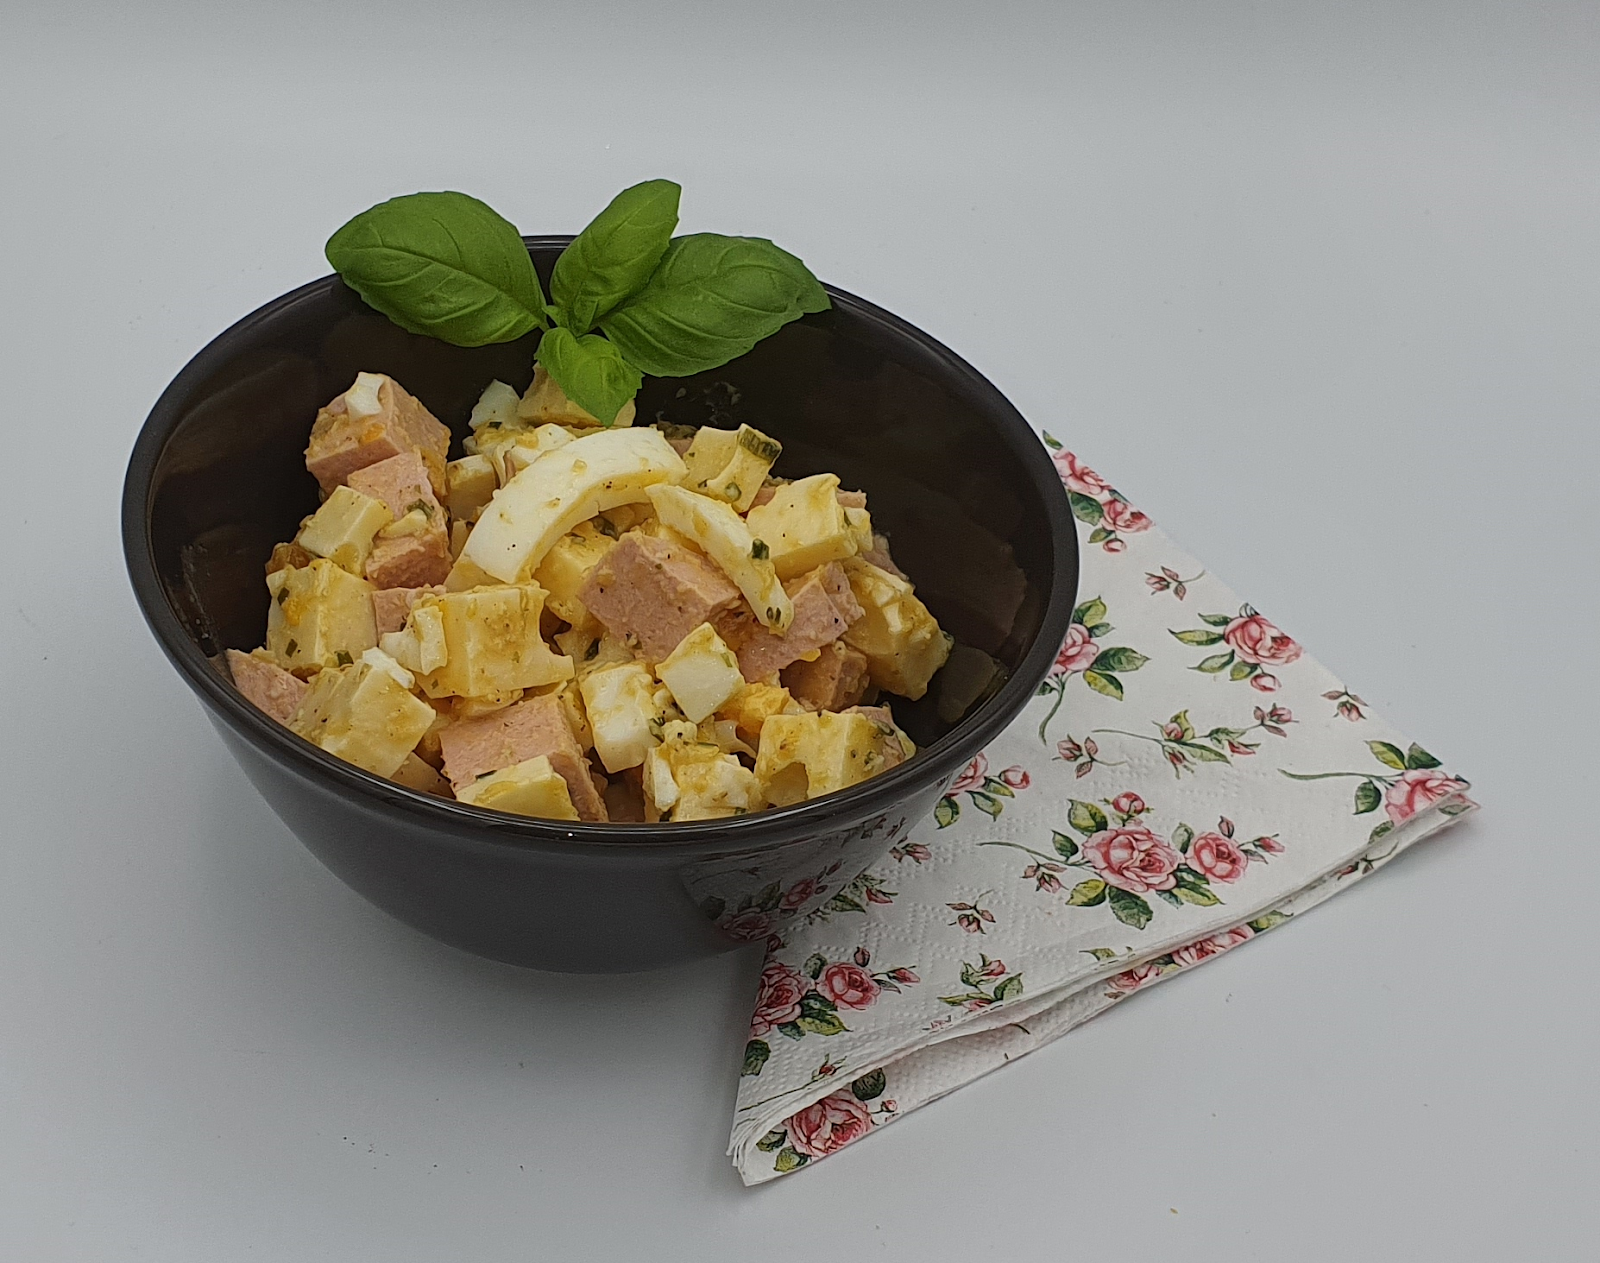 Marlis + Peters Küchenwelt: Käse-Wurst-Salat